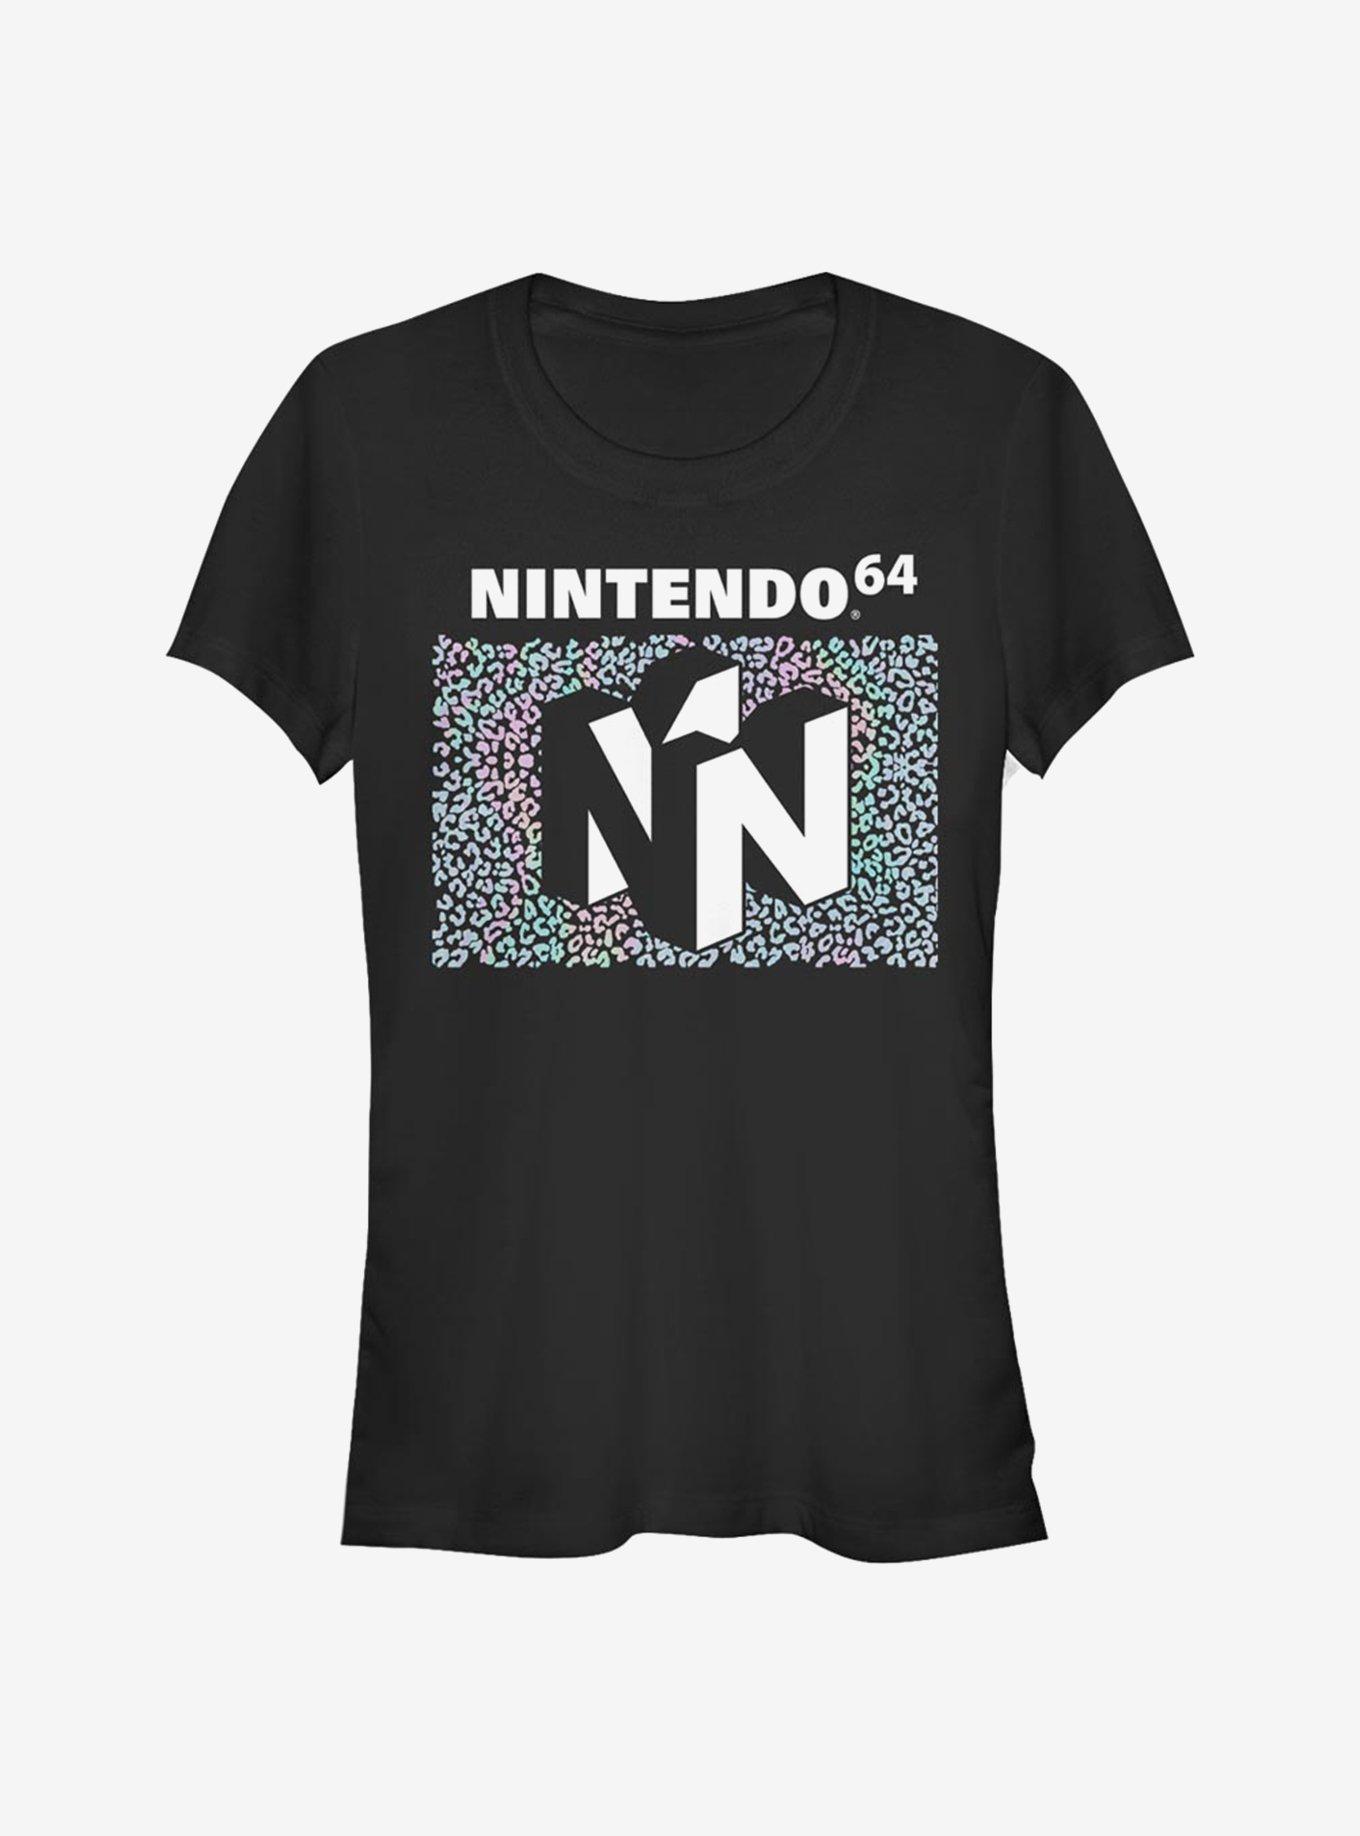 Nintendo Holo Cheetah Girls T-Shirt, BLACK, hi-res